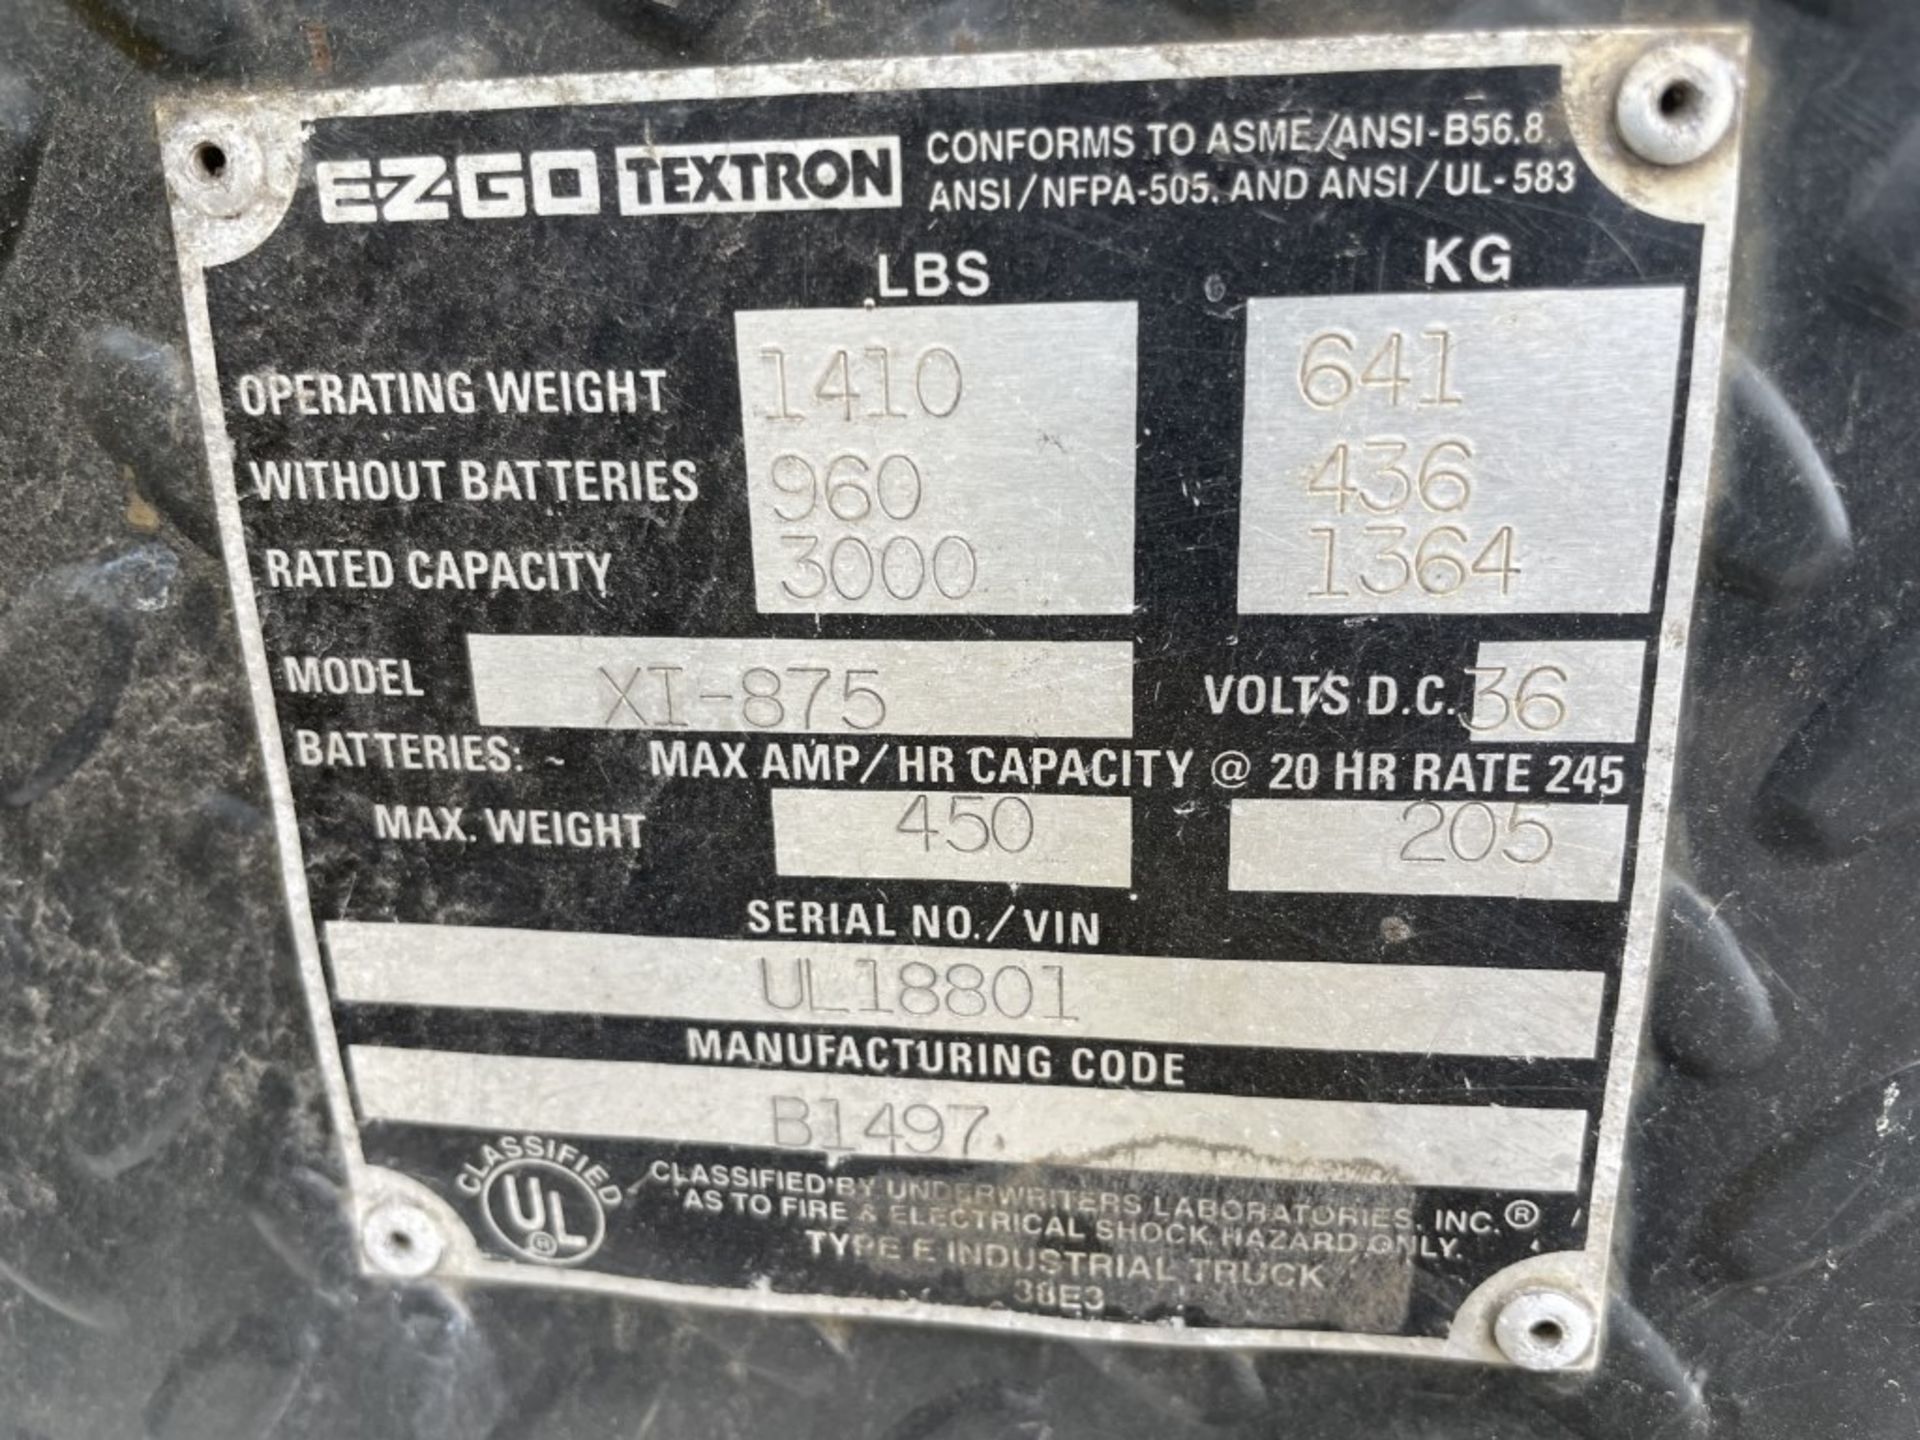 EZ Go XI-875 Utility Cart - Image 8 of 8